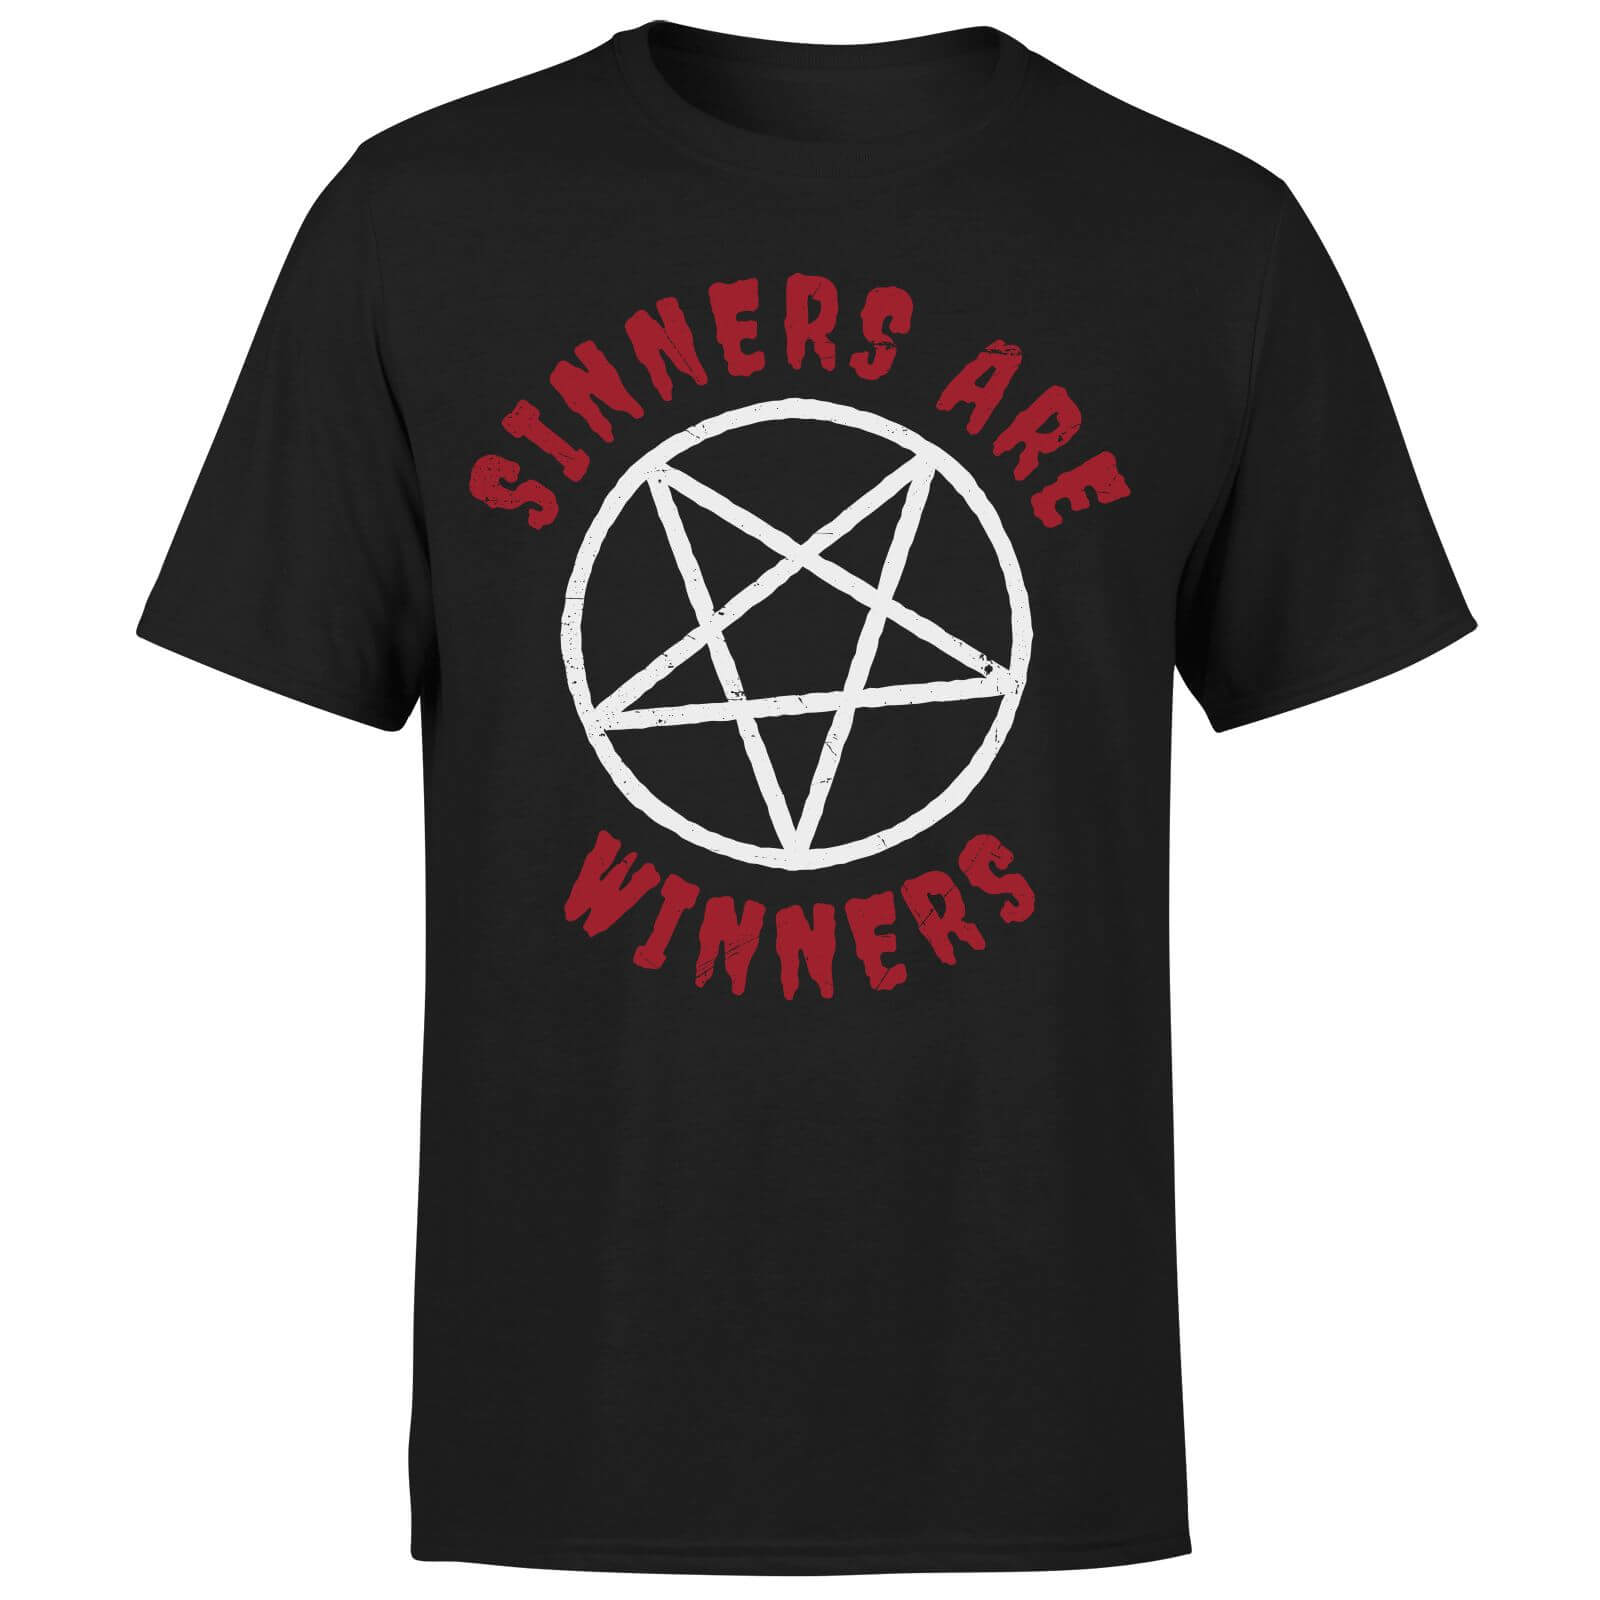 Sinners are Winners T-Shirt - Black - S